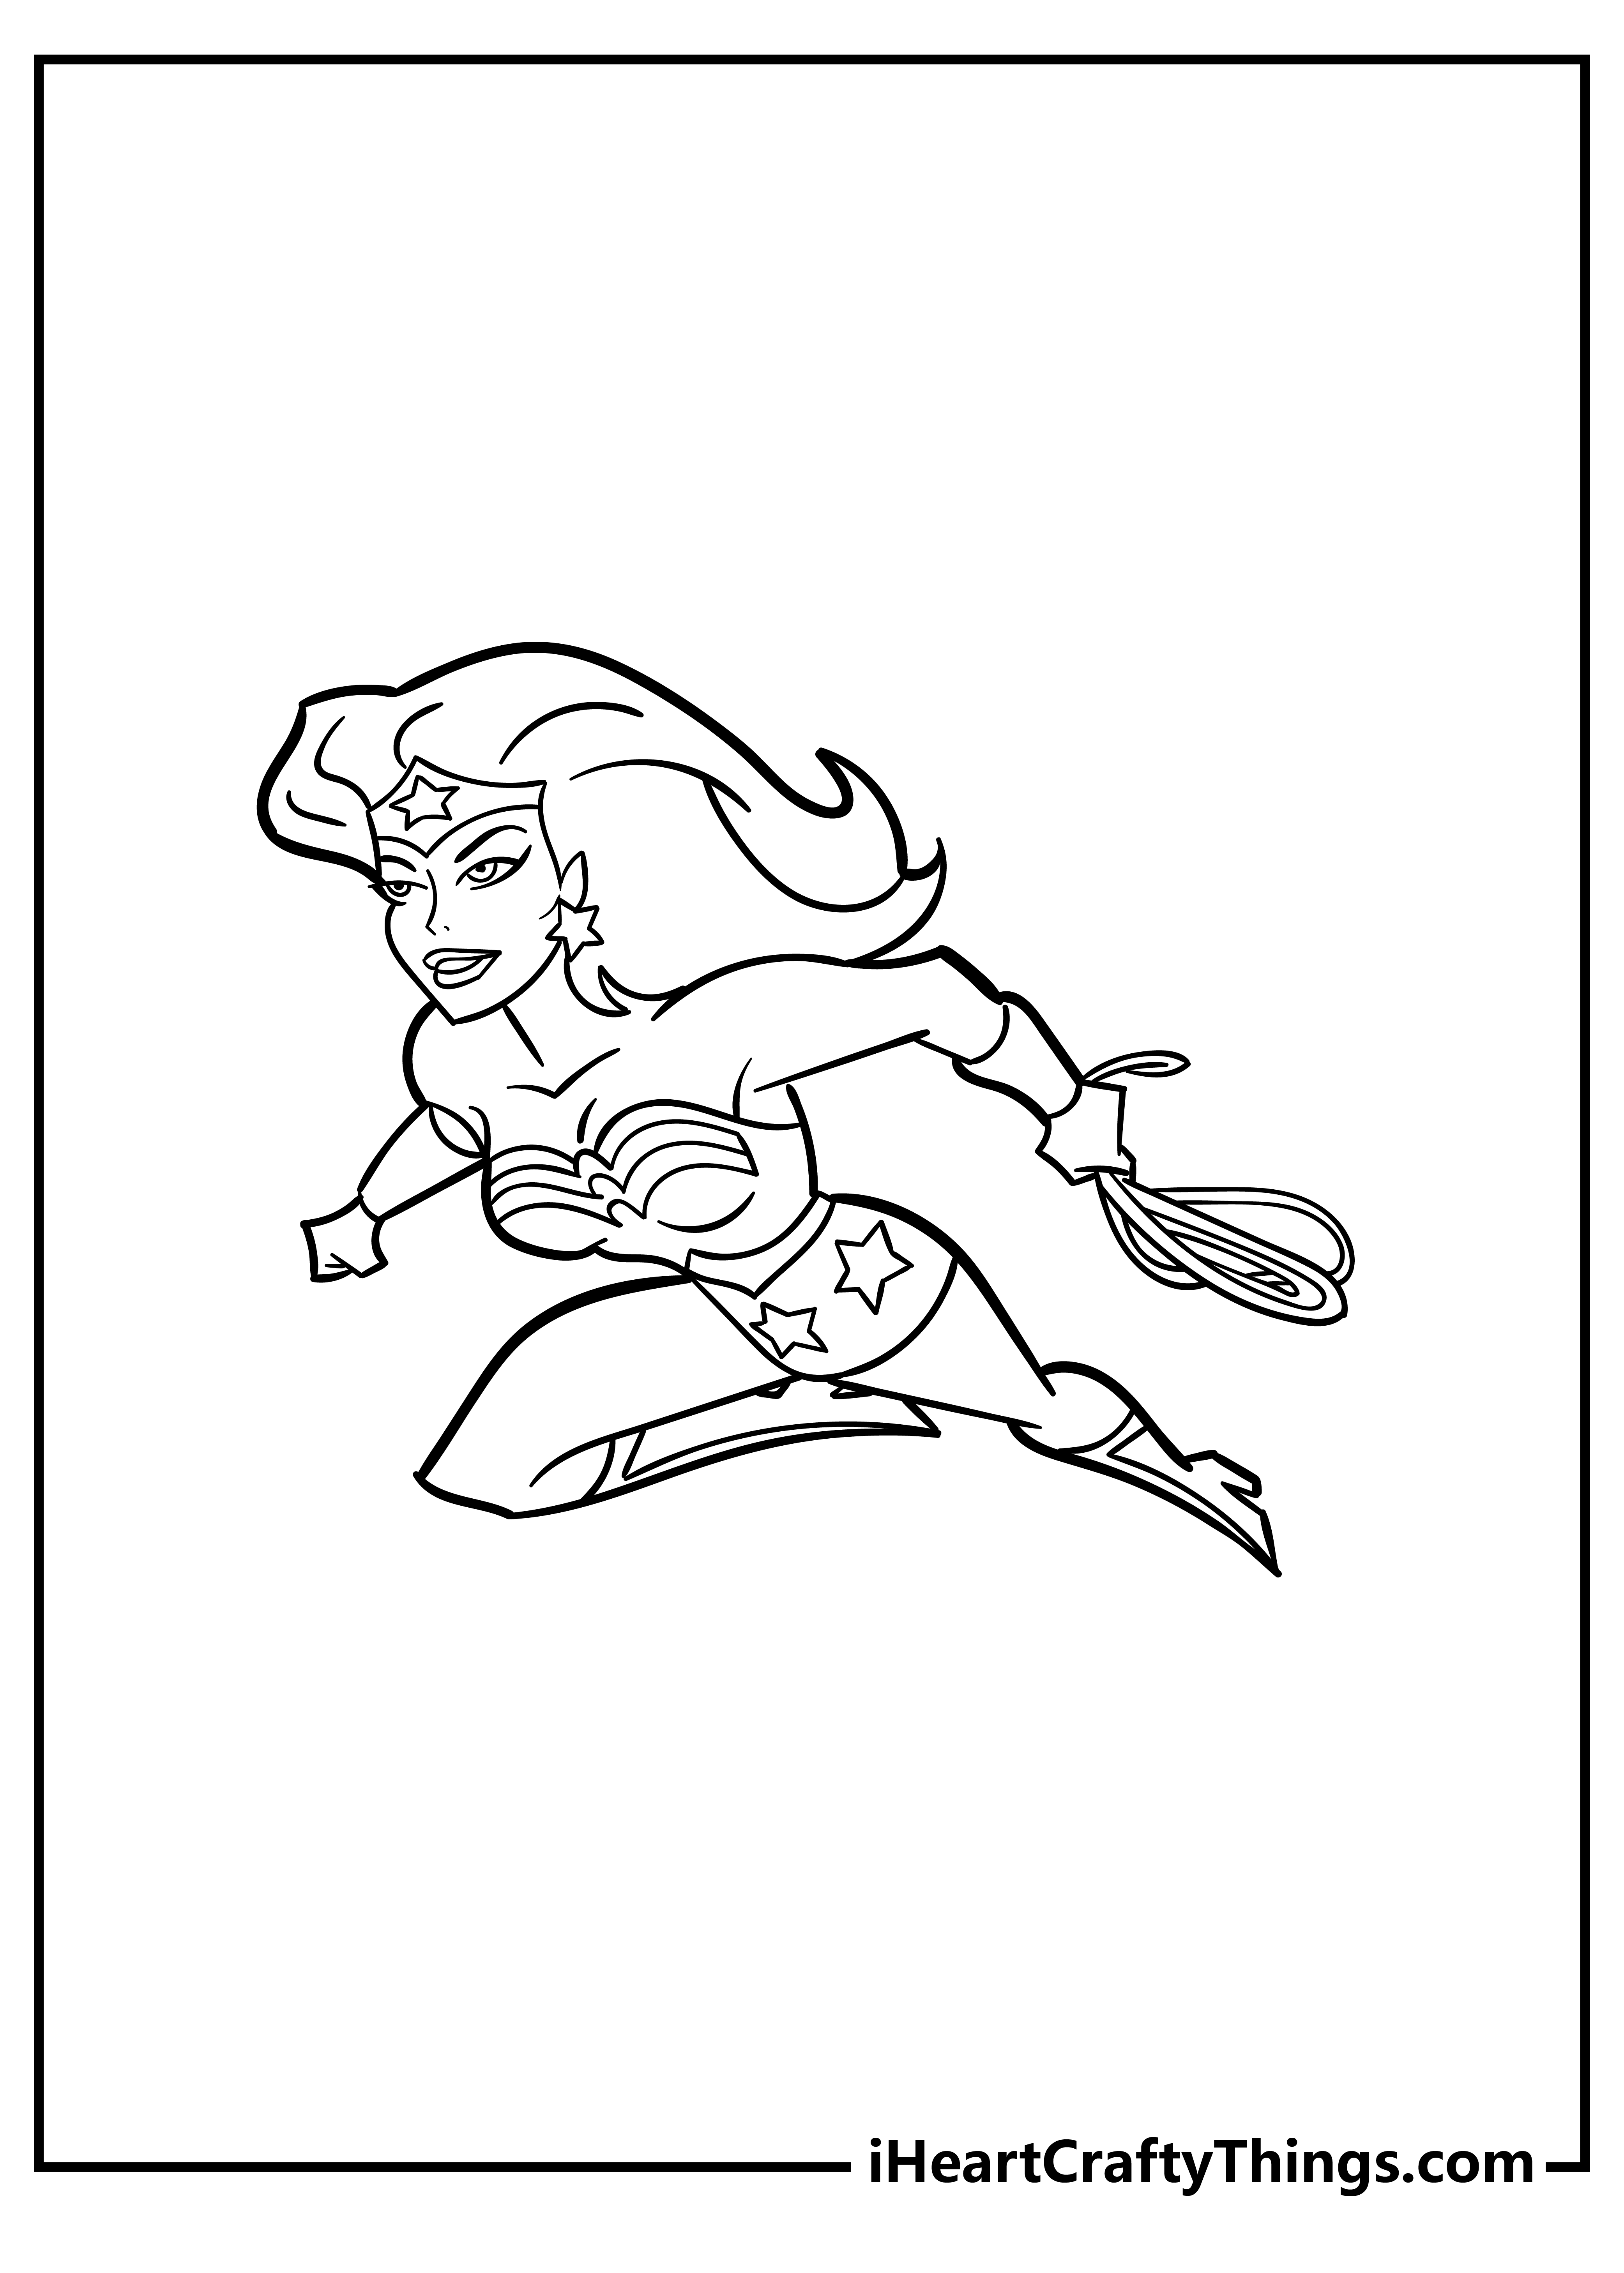 Wonder Woman Coloring Pages free pdf download